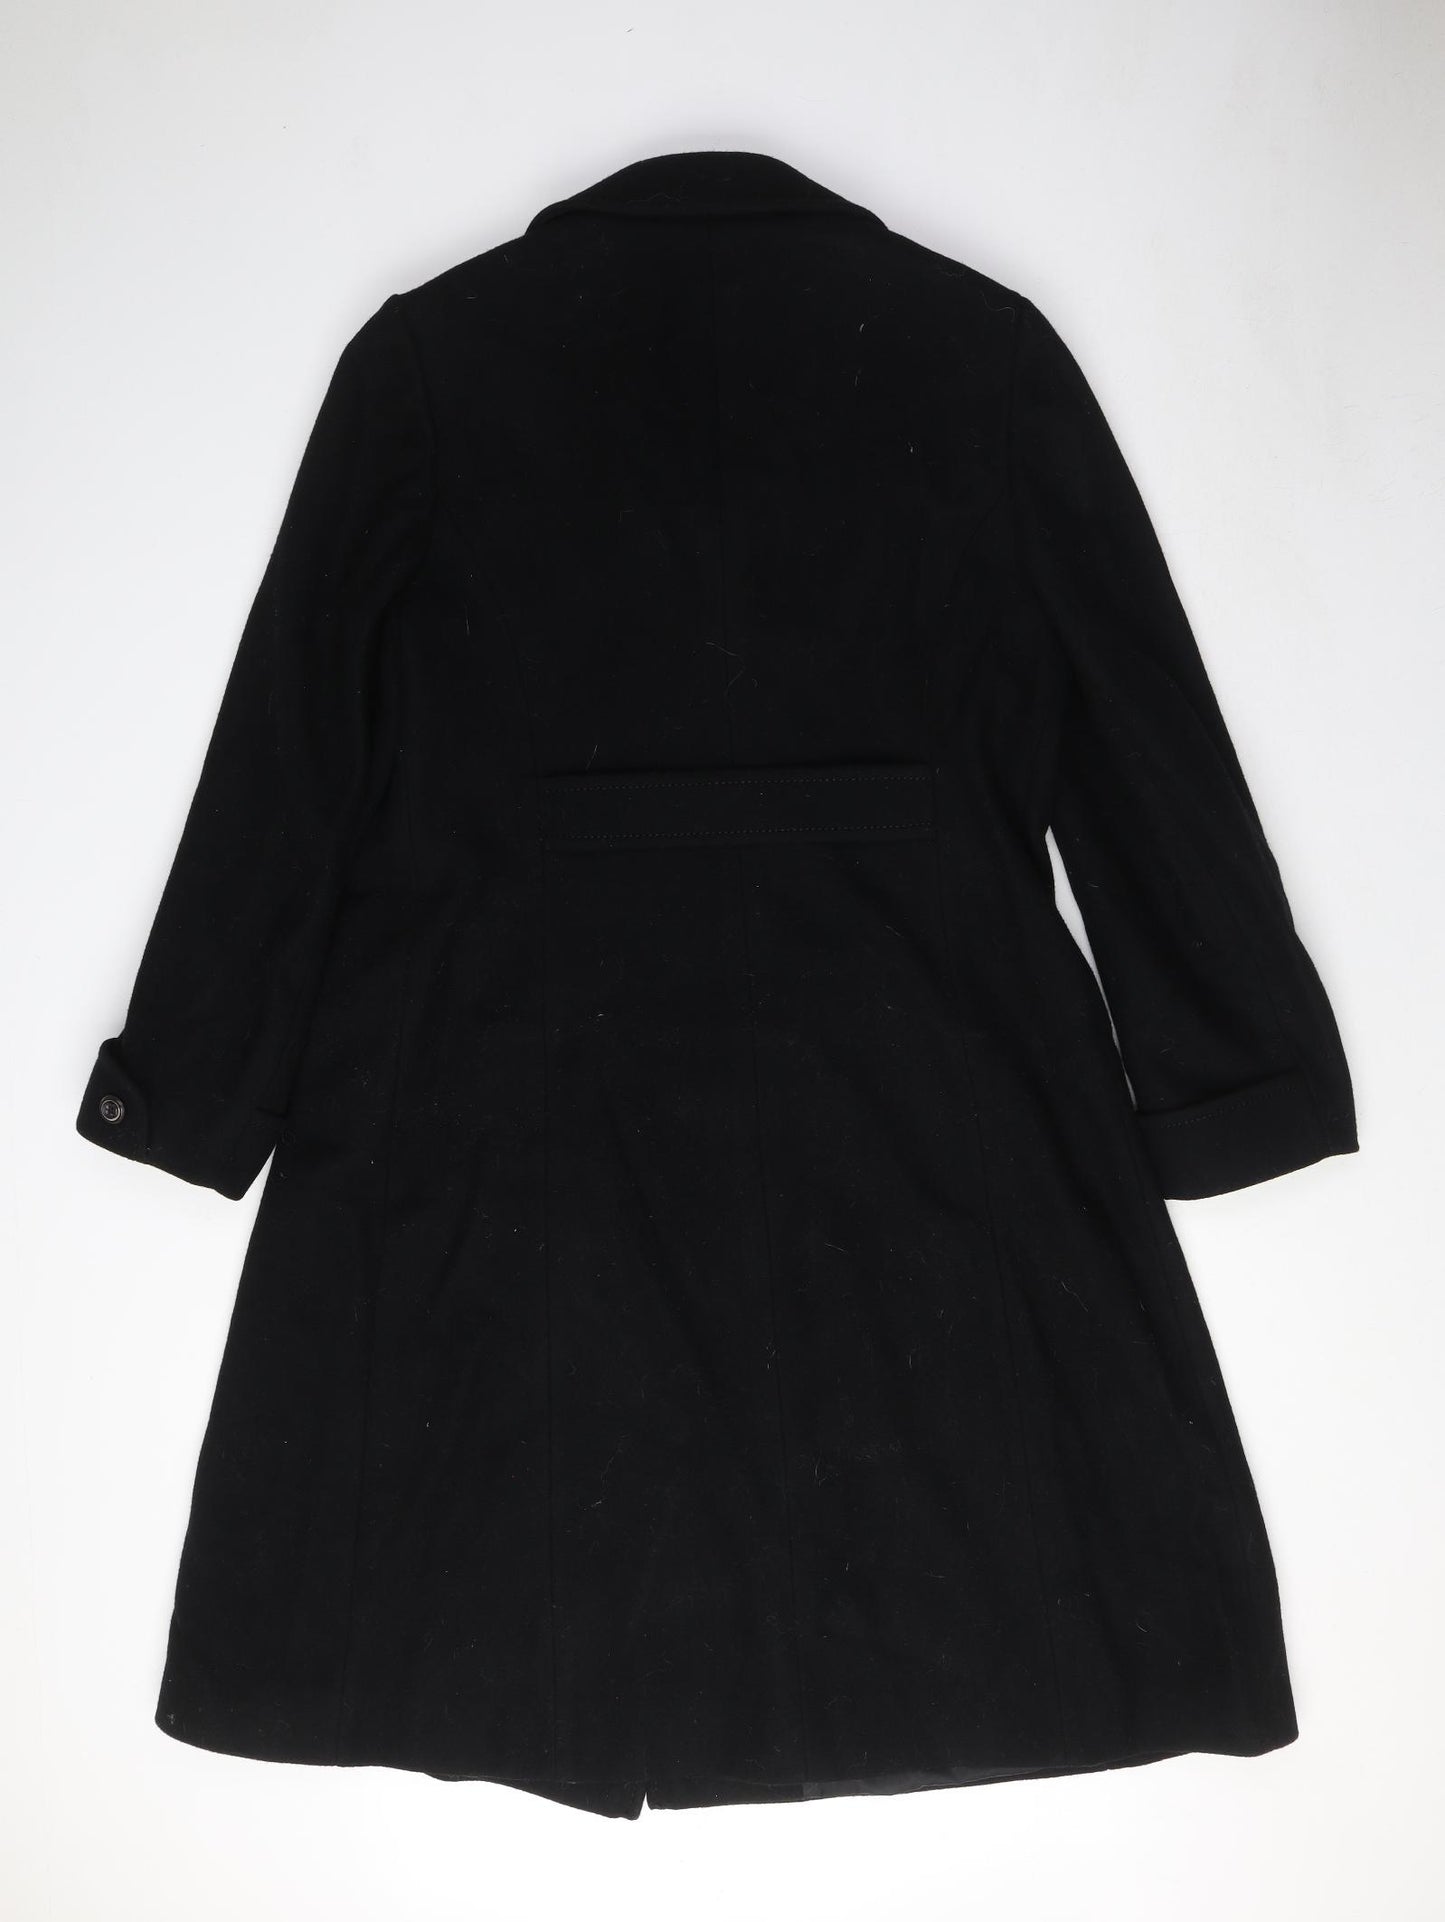 St Michael Womens Black Overcoat Coat Size 16 Button